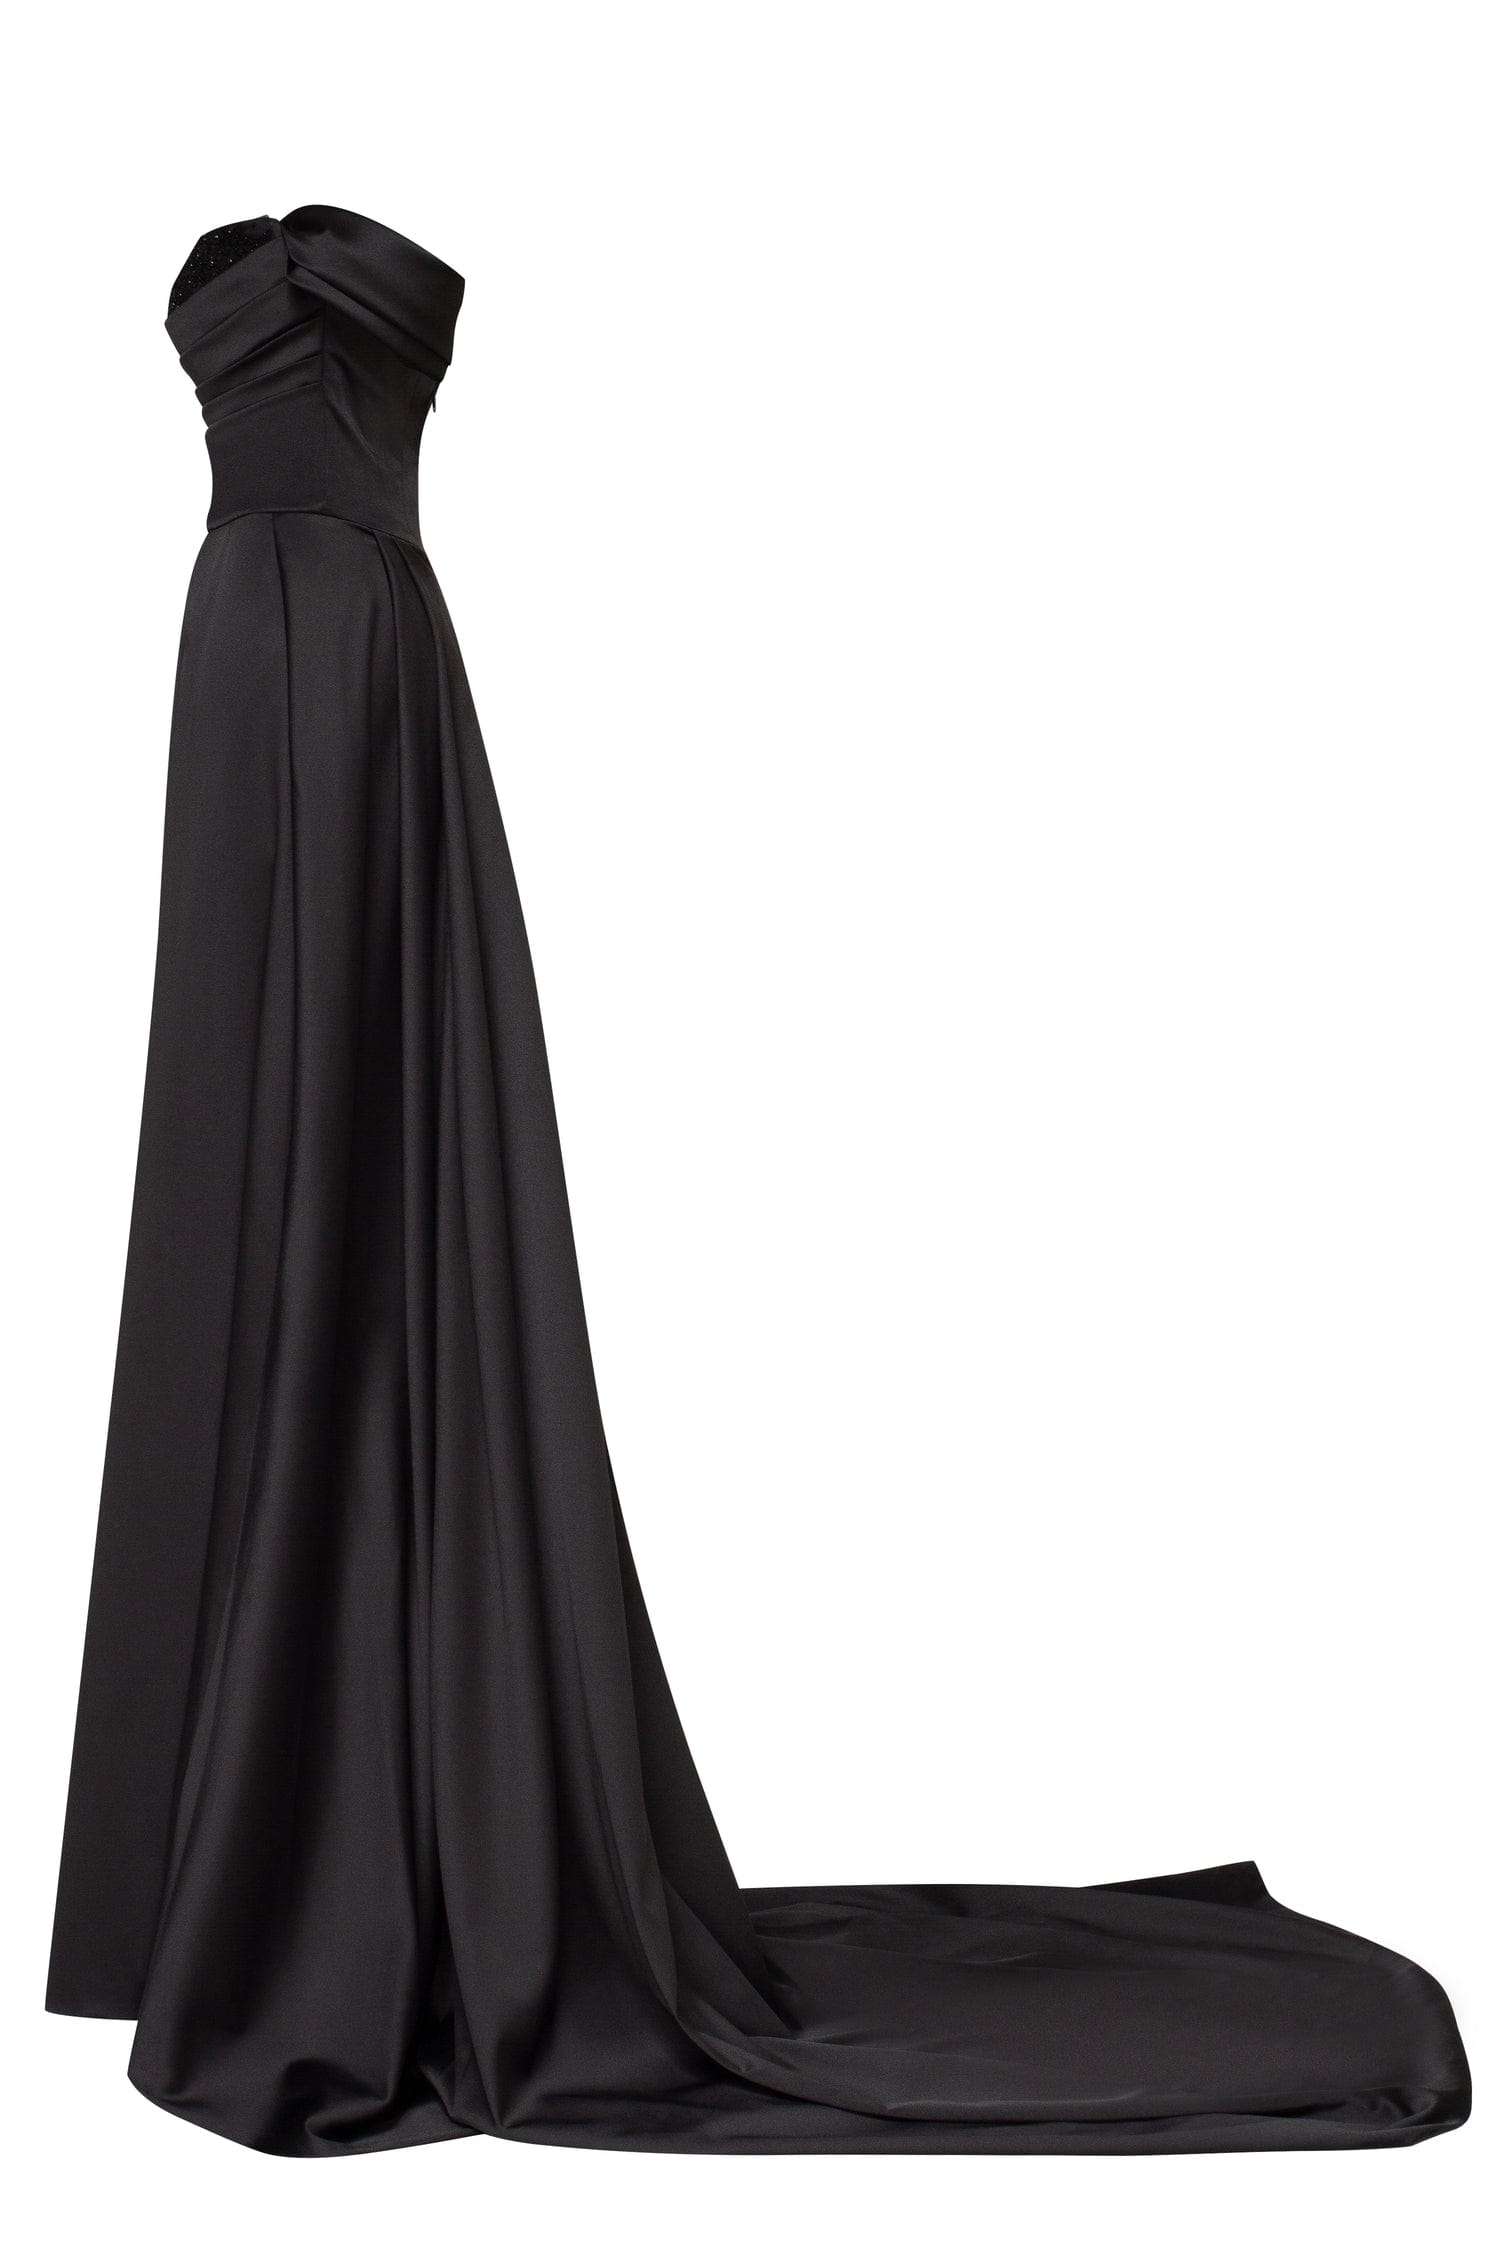 Black Gothic Wedding Dresses Puffy Short Sleeves Corset Sweep Train Bridal  Gowns | eBay